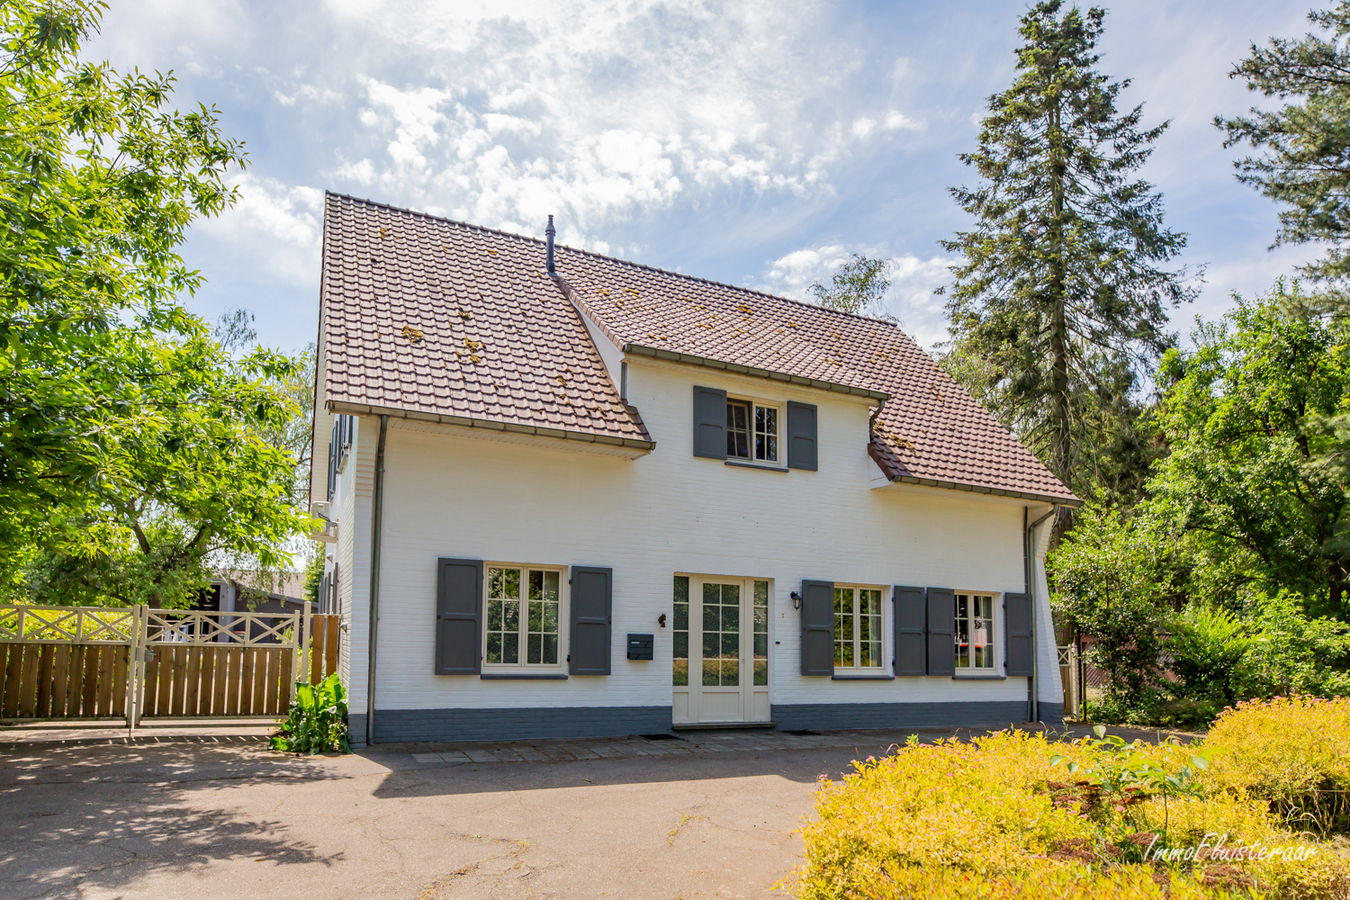 Property for sale in Dilsen-Stokkem